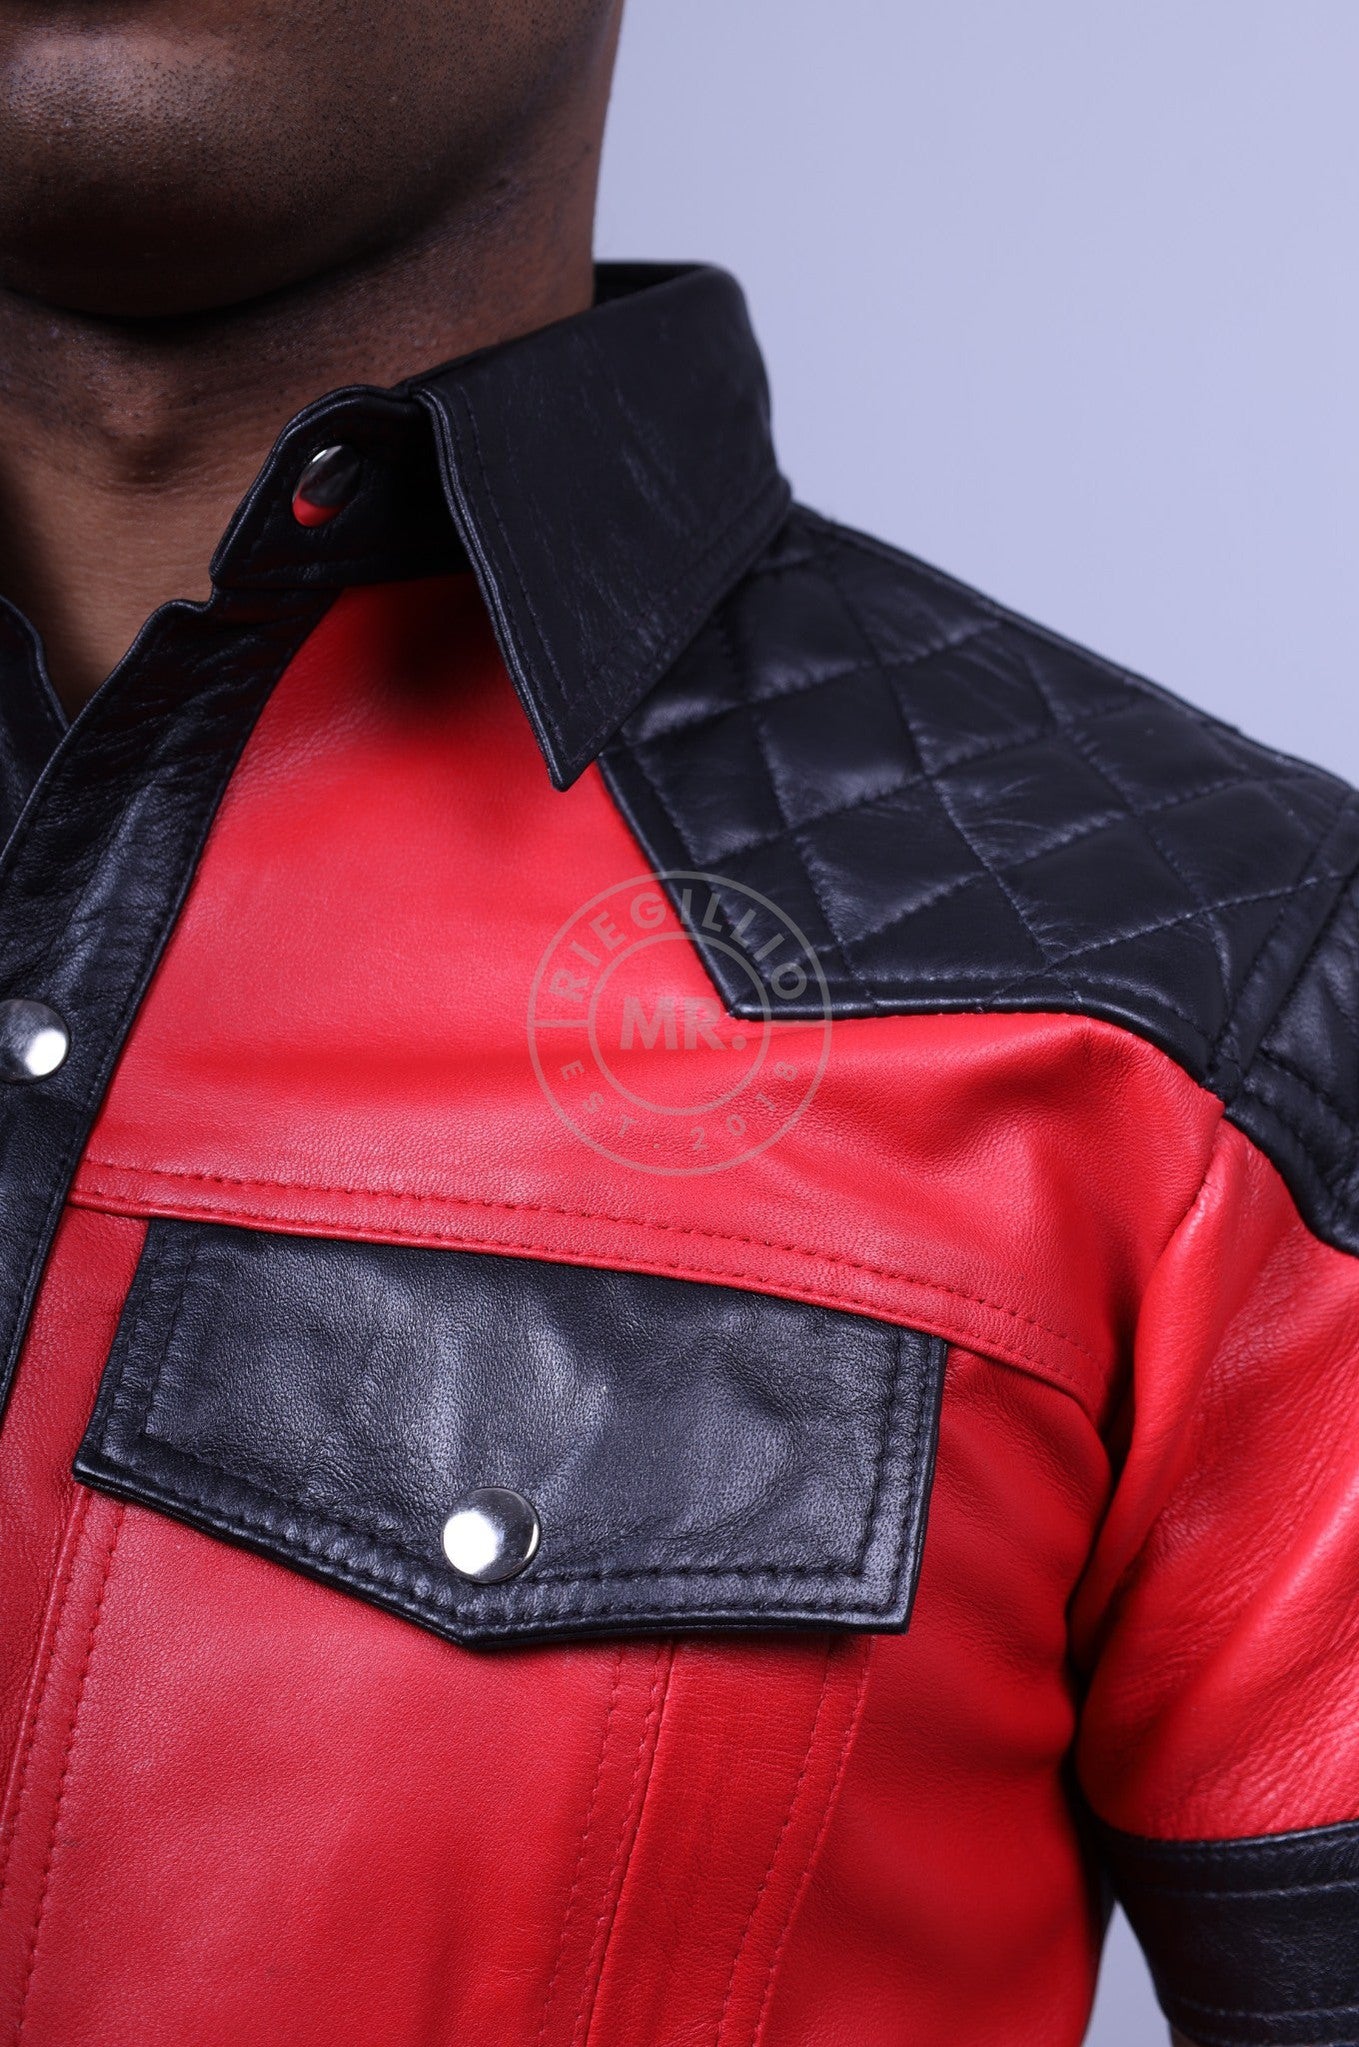 Red Leather Shirt with Black Padding-at MR. Riegillio